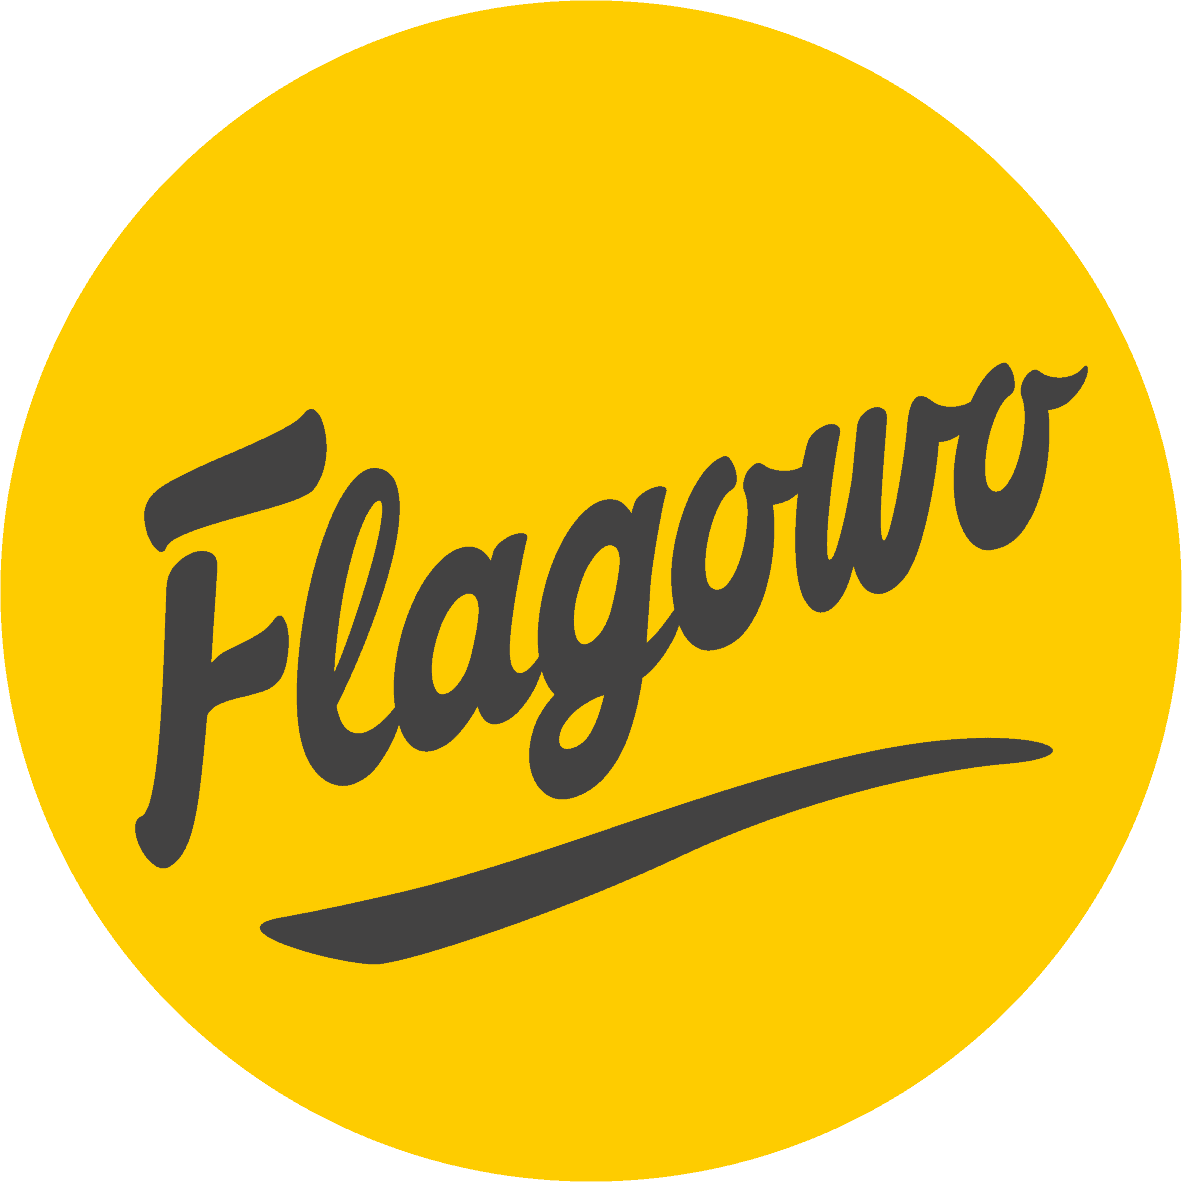 Flagowo